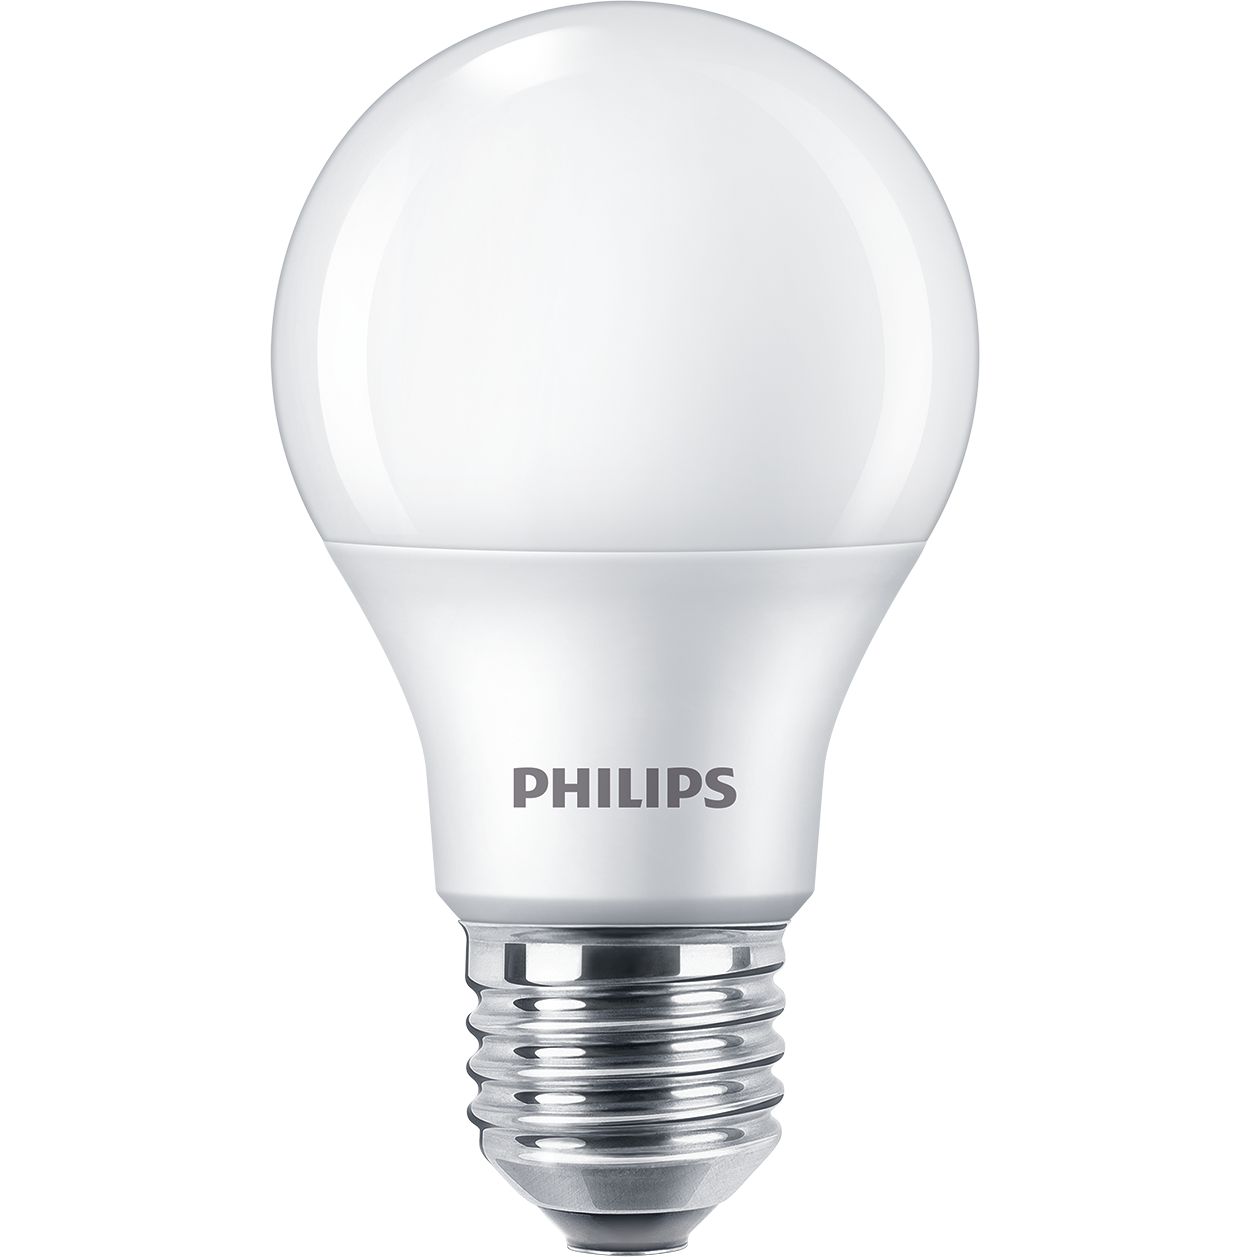 Teleurgesteld Sympathiek Fictief Led Lamp 8718699630768 | Philips